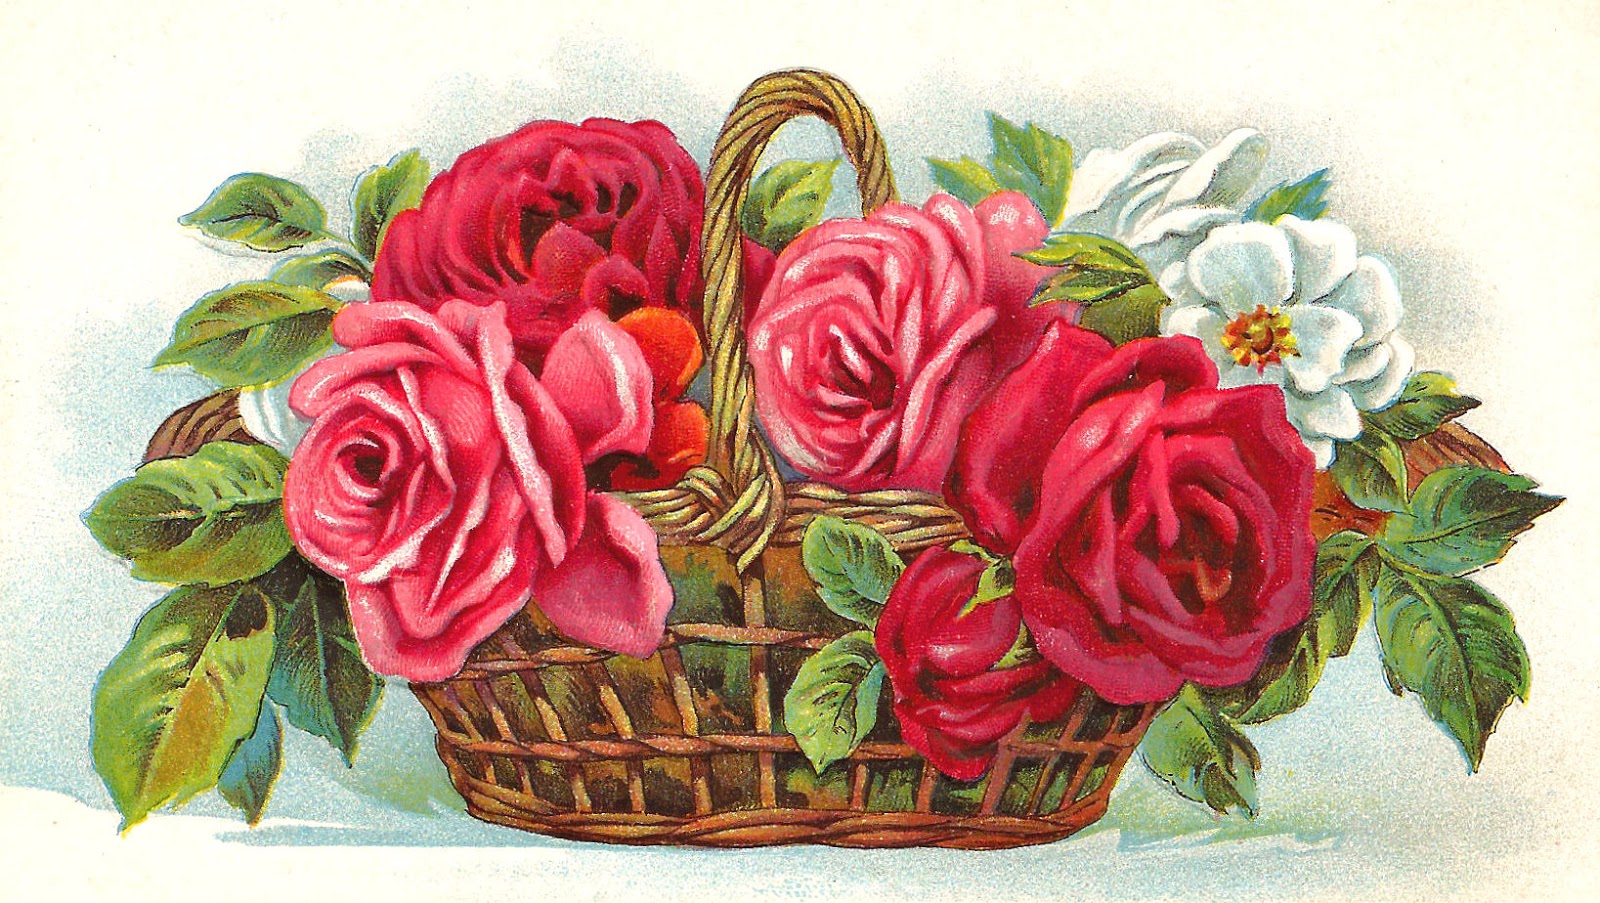 Antique Images Free Red Rose Clip Art Flower Basket Full Of Red Pink